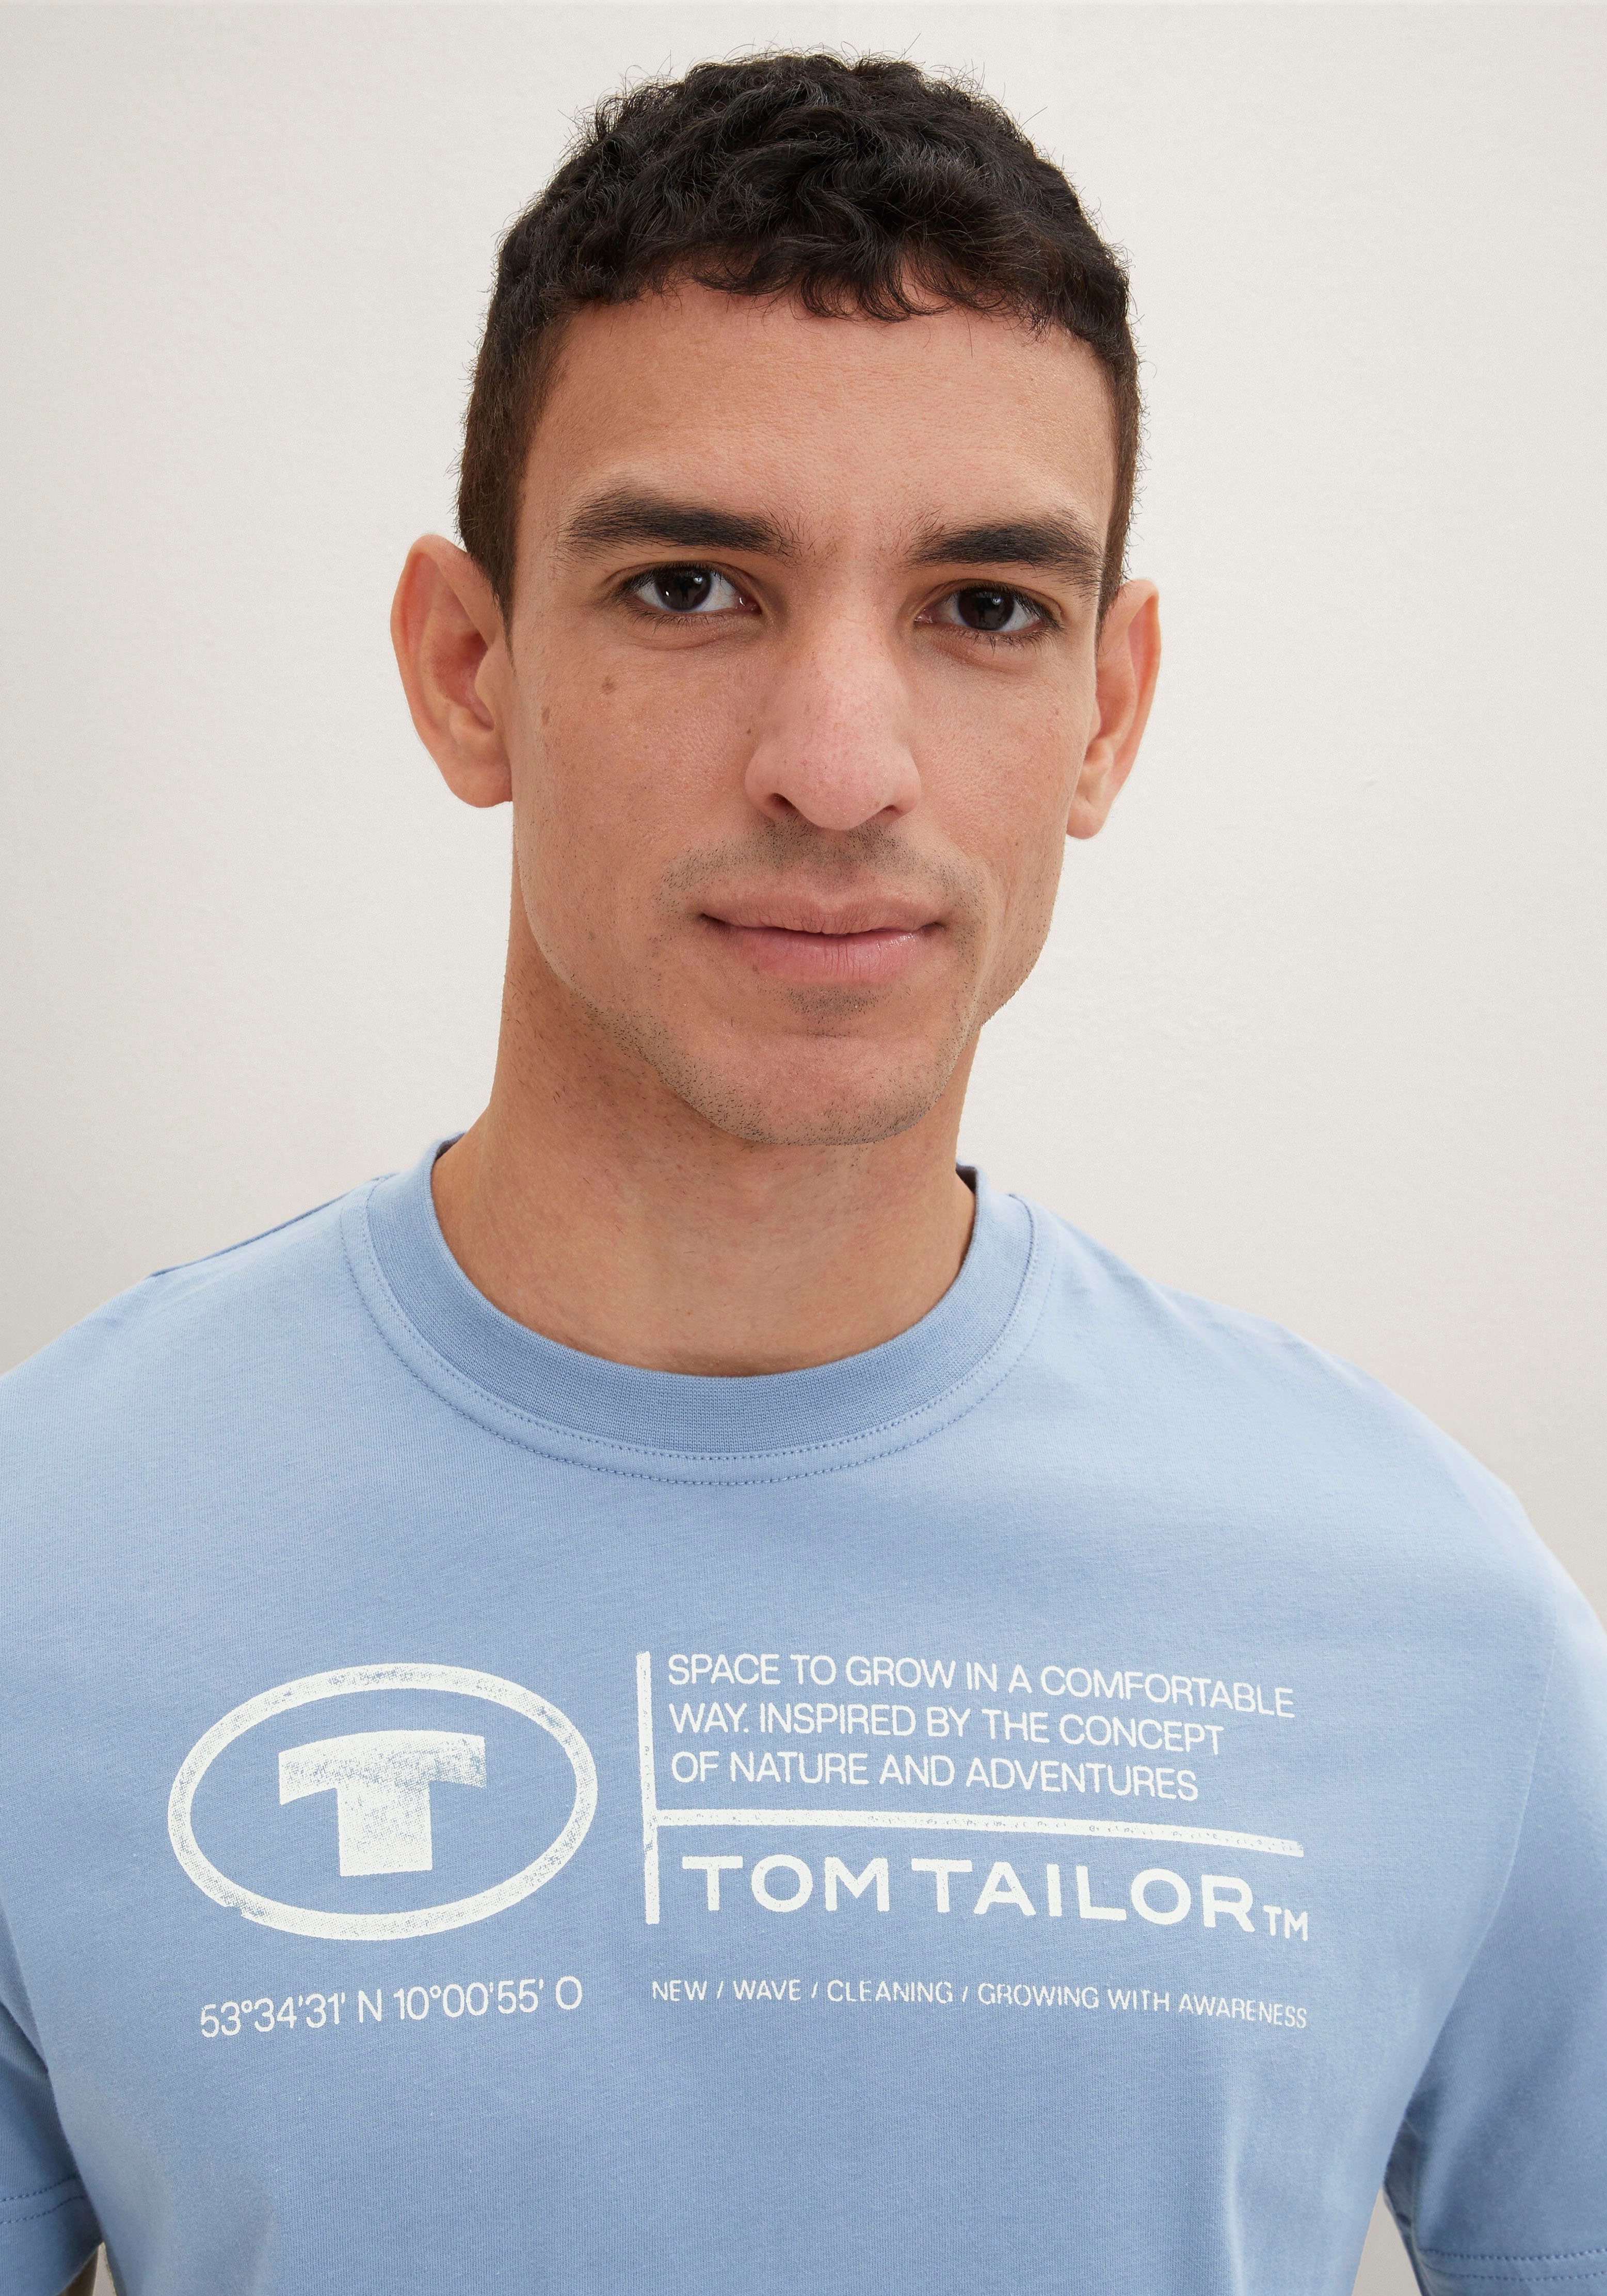 TOM TAILOR Tailor Blue T-Shirt Mid Herren Frontprint Print-Shirt Greyish Tom